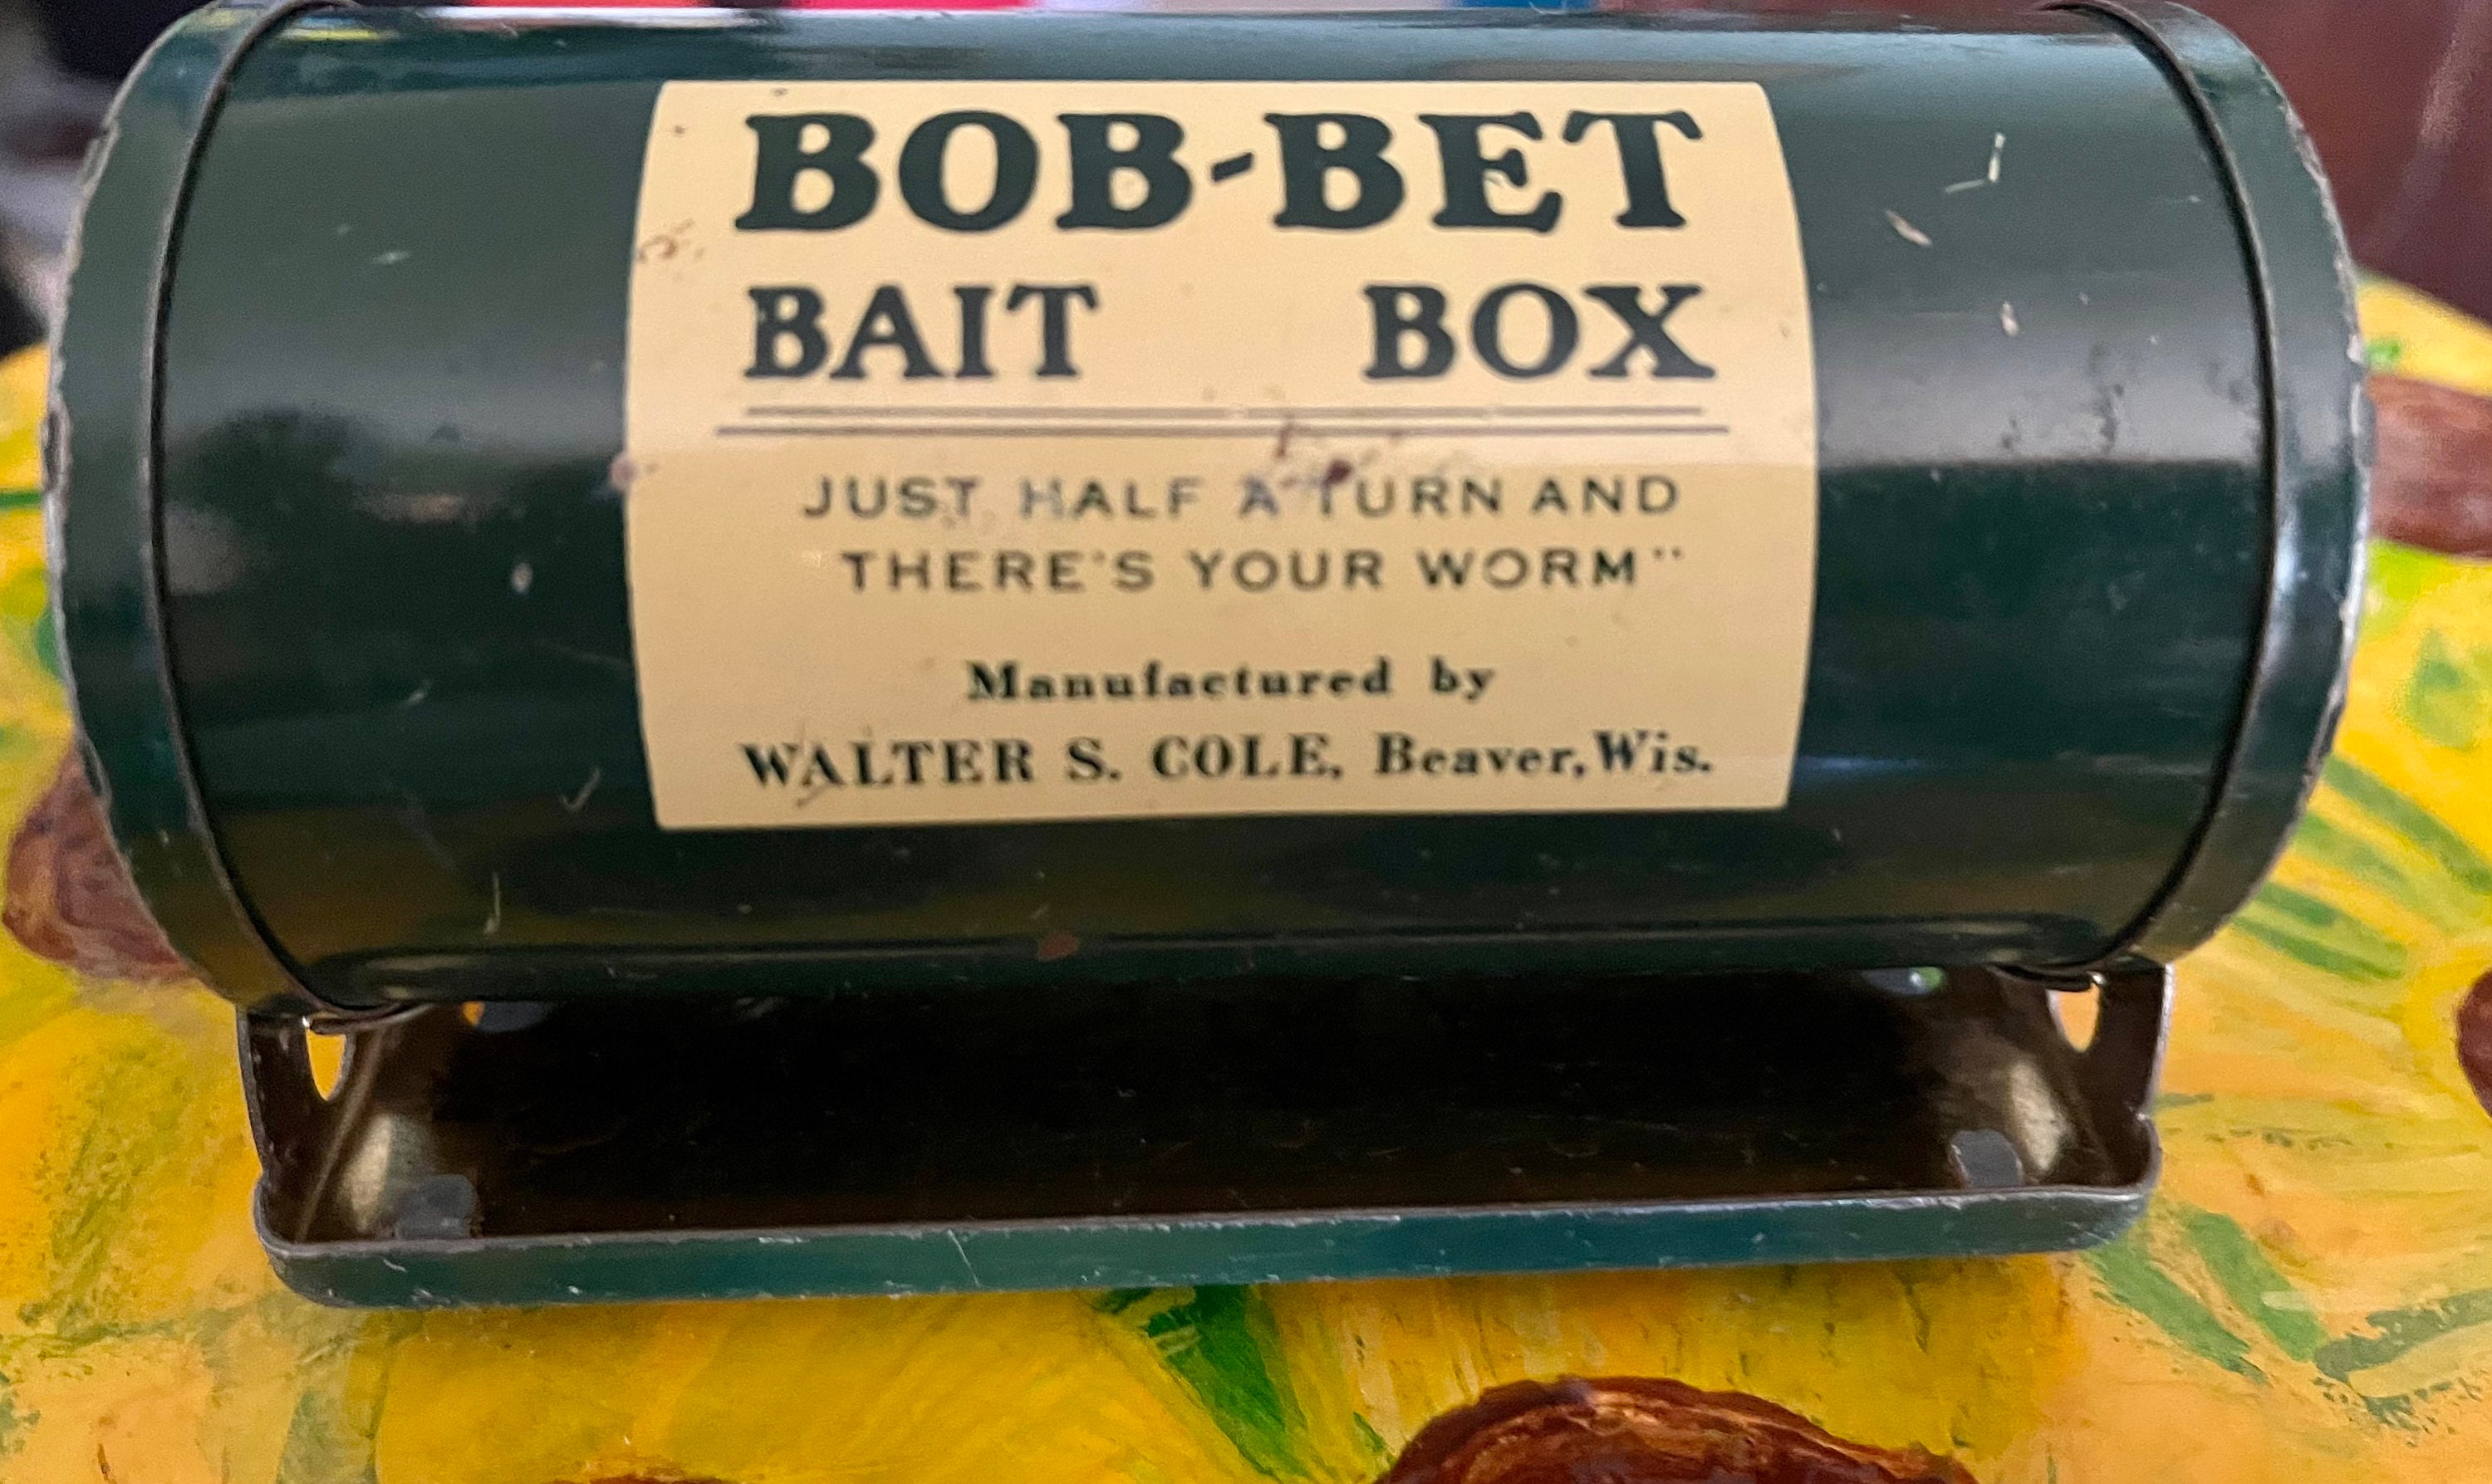 Bob-Bet Bait Box